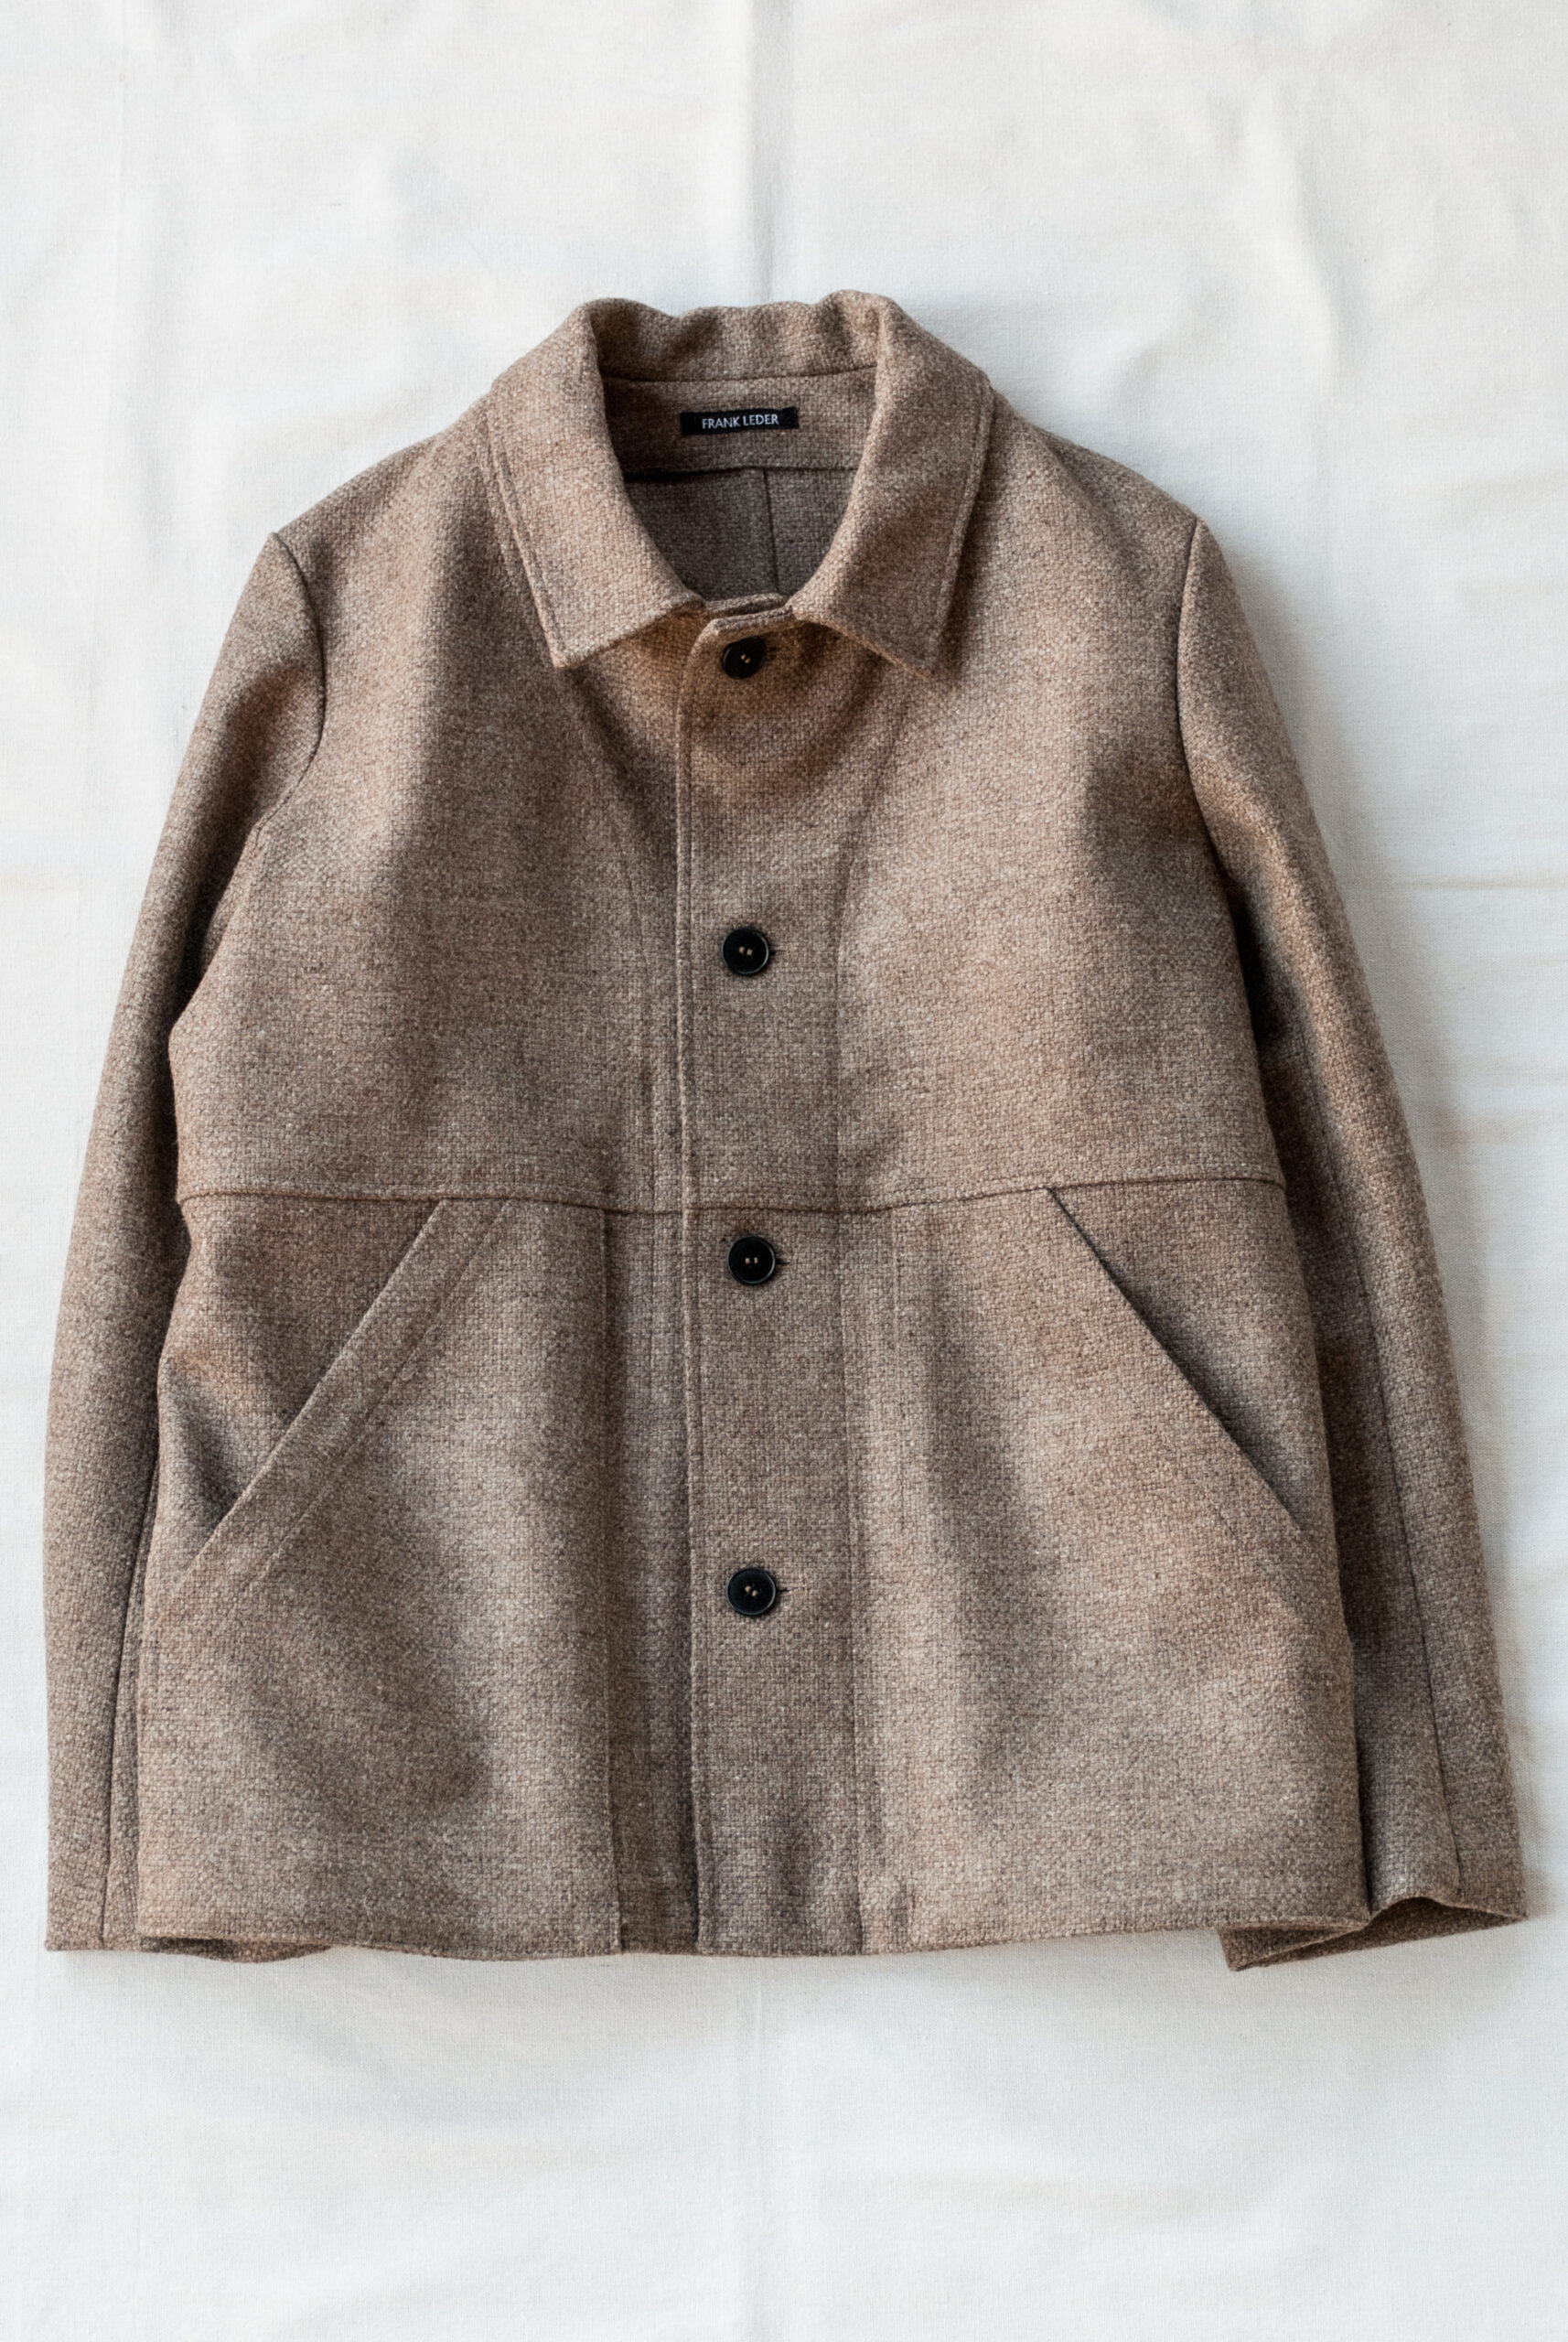 Frank Leder Beige Brown Wool Jacket | kado〔カド オノミチ〕